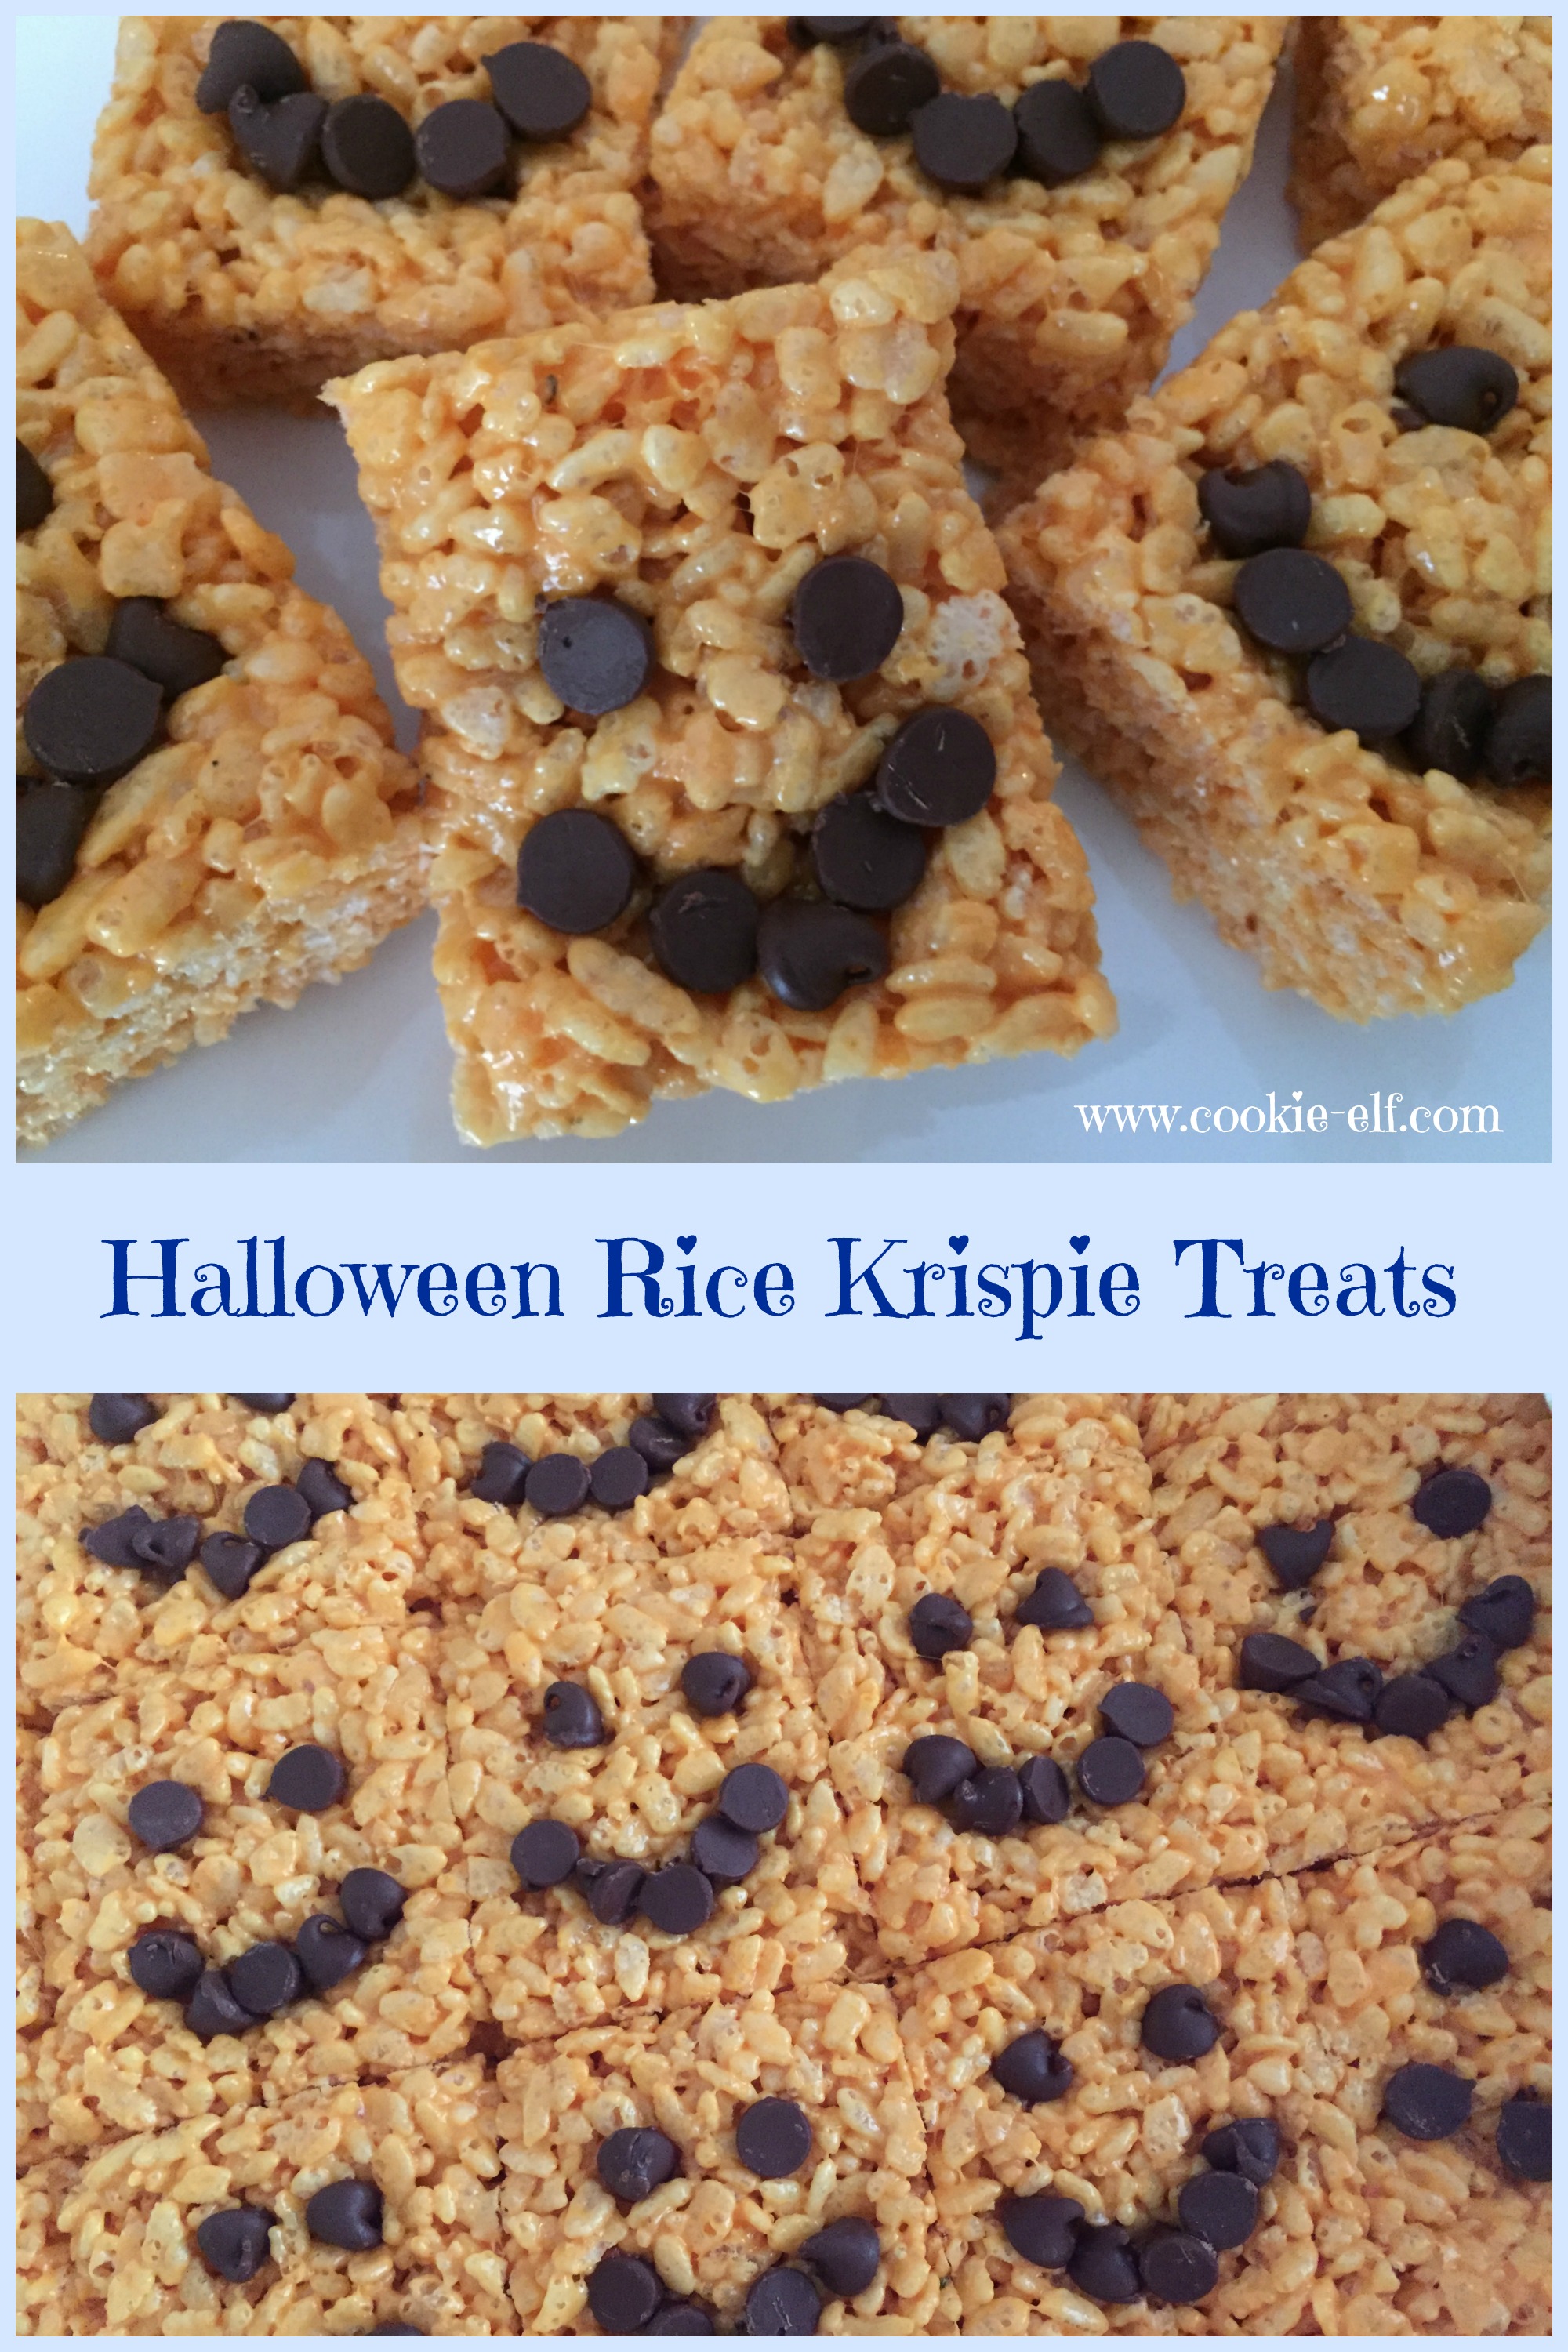 Easy Halloween Rice Krispie Treats with The Cookie Elf